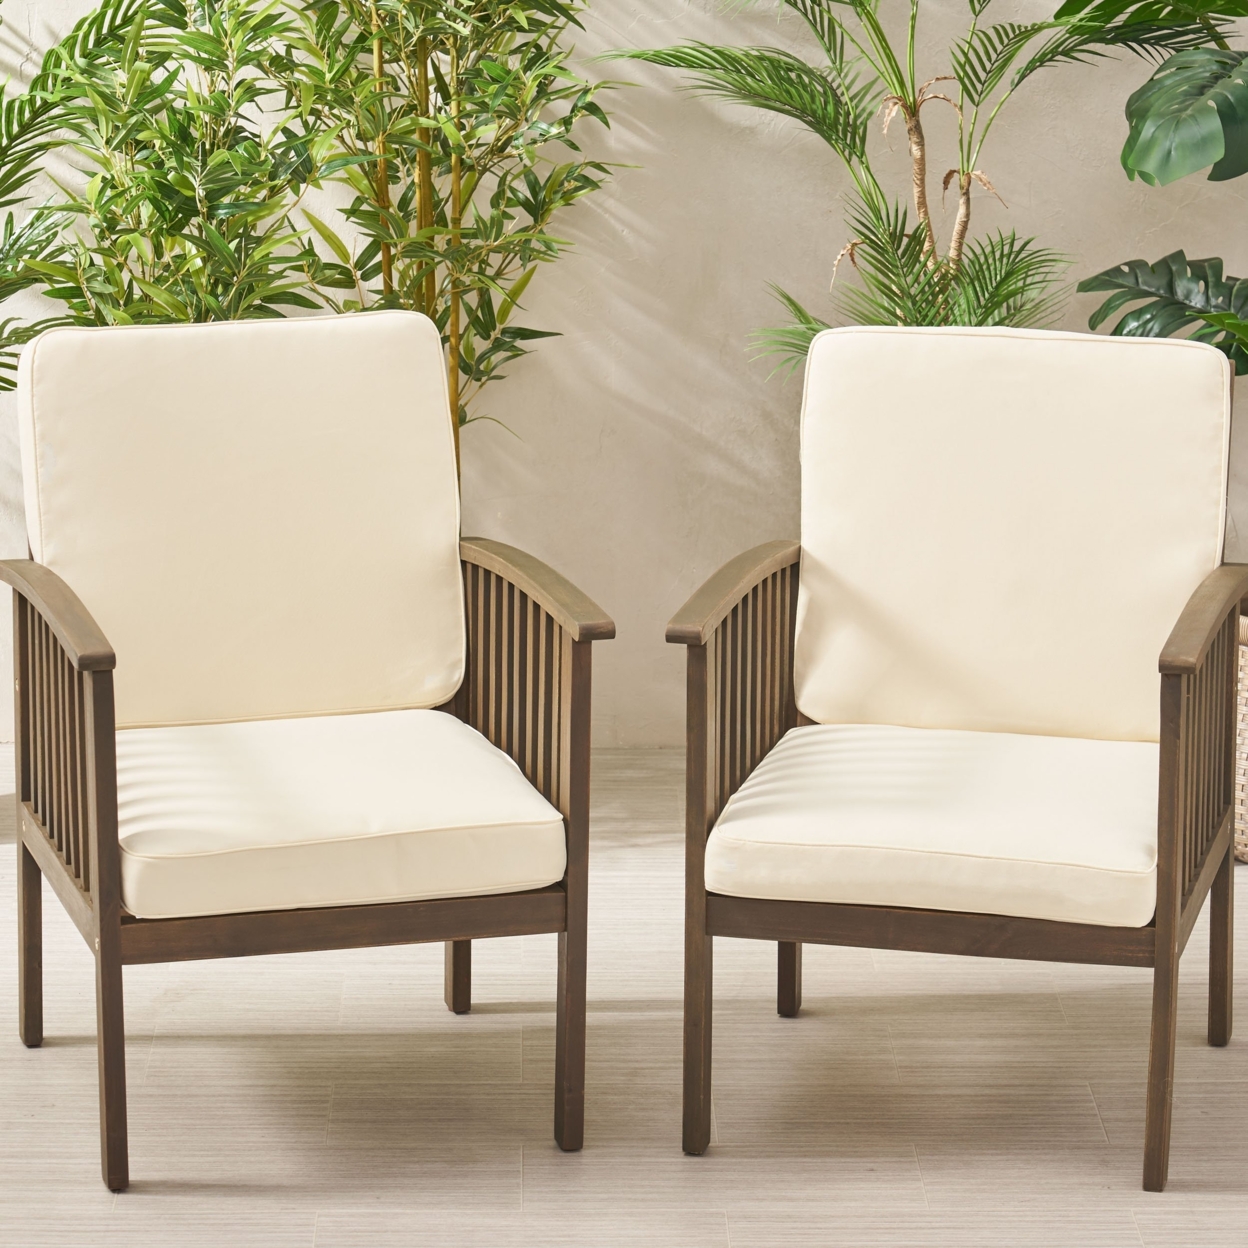 Eydan Outdoor Water Resistant Fabric Club Chair Cushions (Set Of 2) - Cream